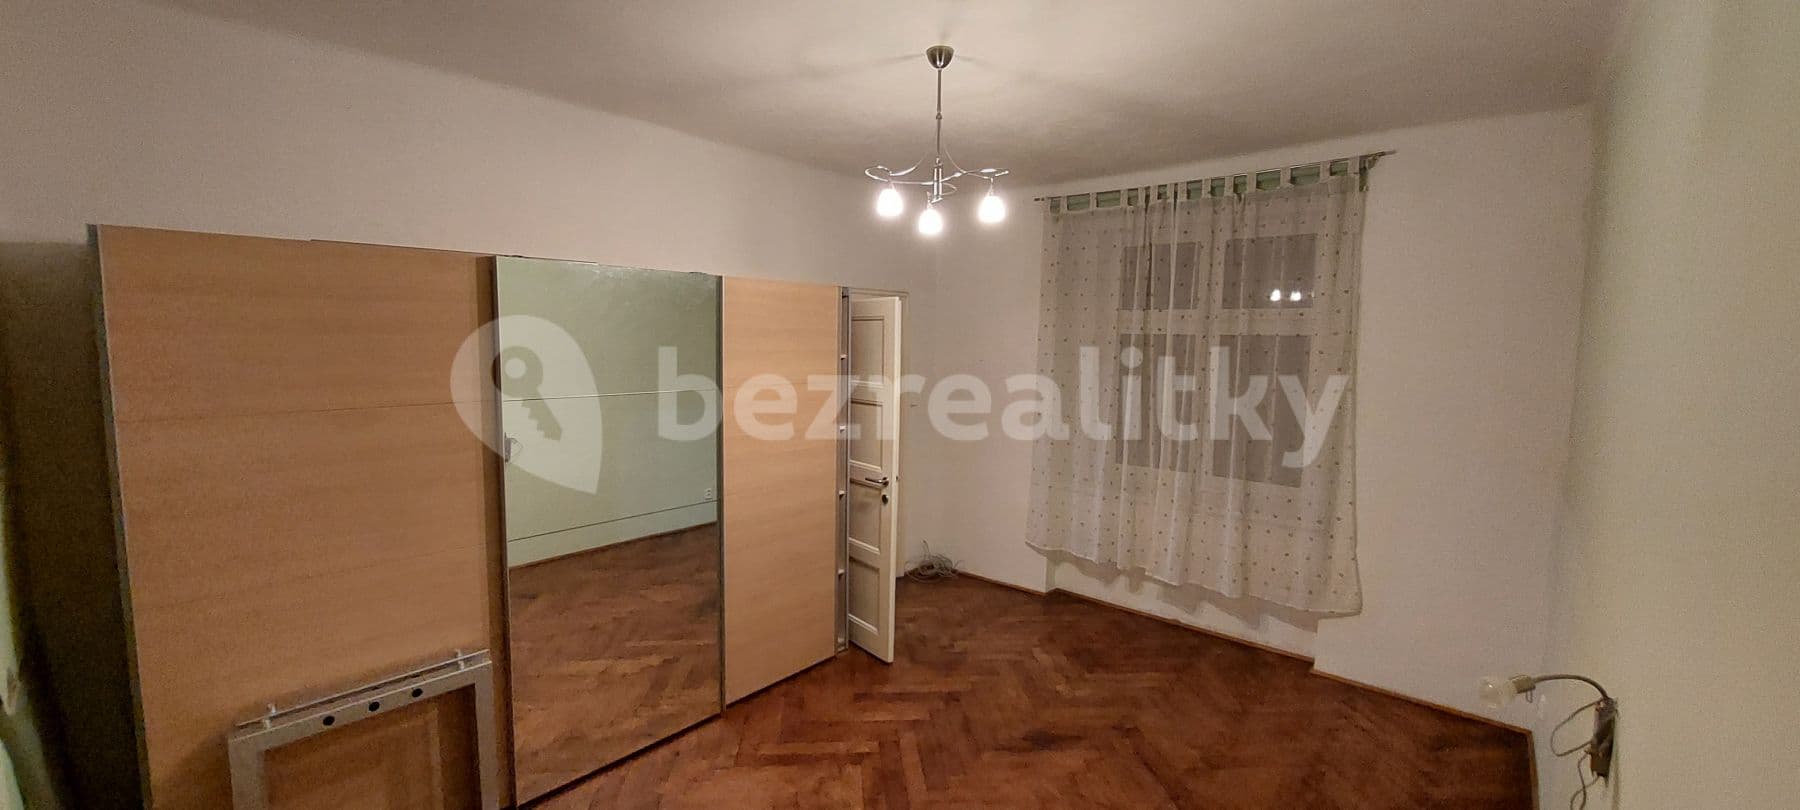 1 bedroom with open-plan kitchen flat to rent, 45 m², Táborská, Prague, Prague